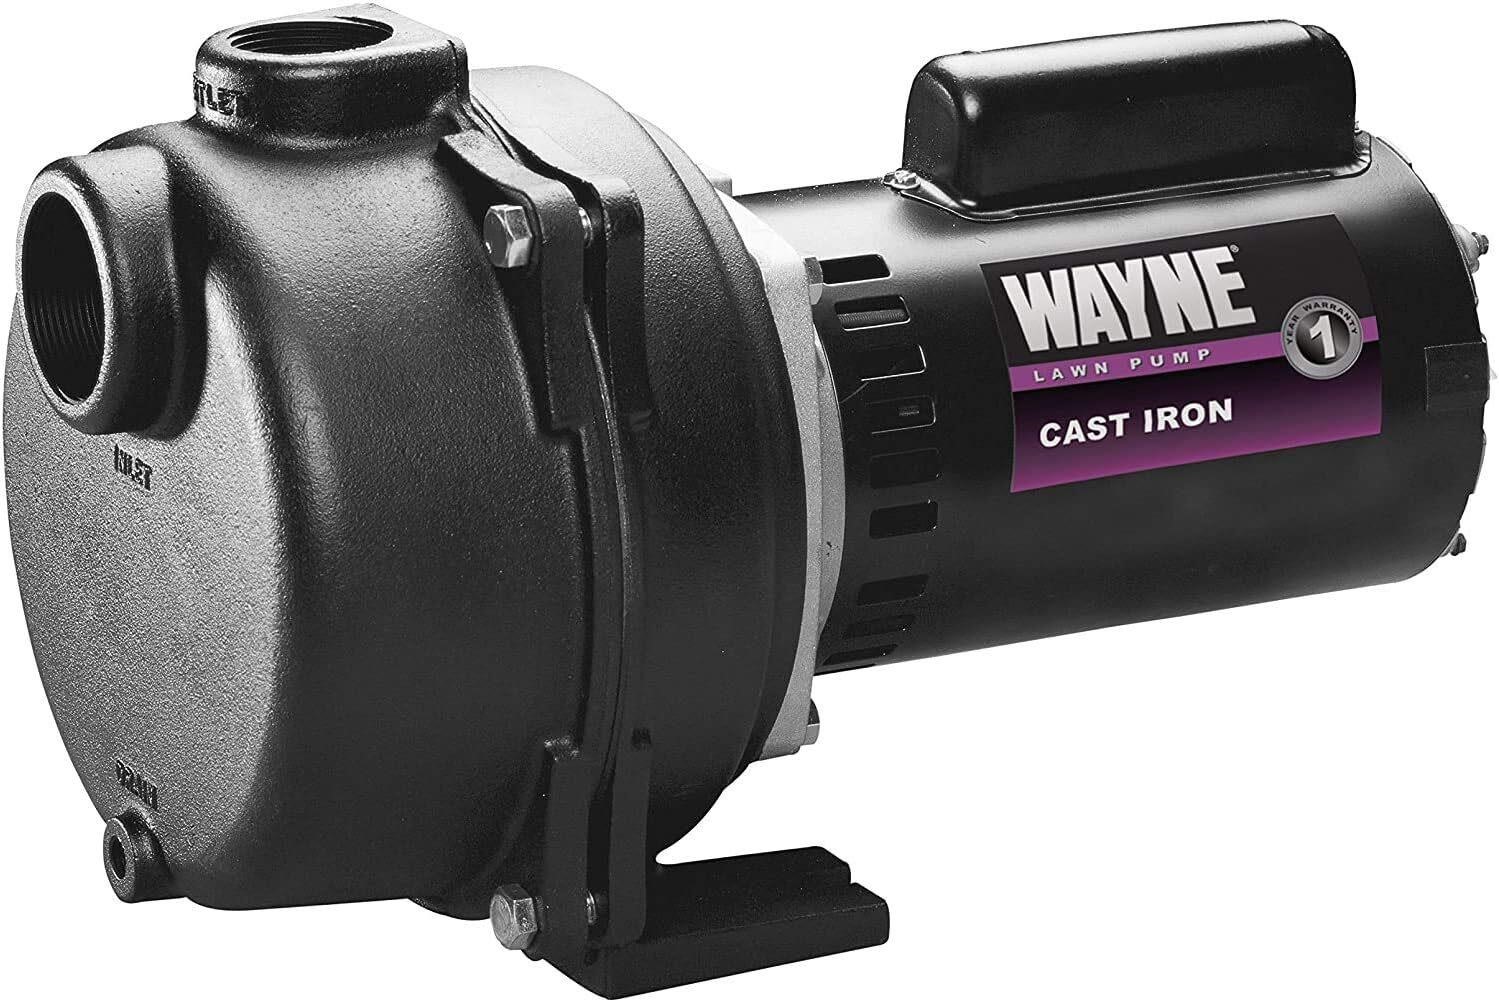 Wayne WLS150 1.5 HP Cast Iron Sprinkling Pump